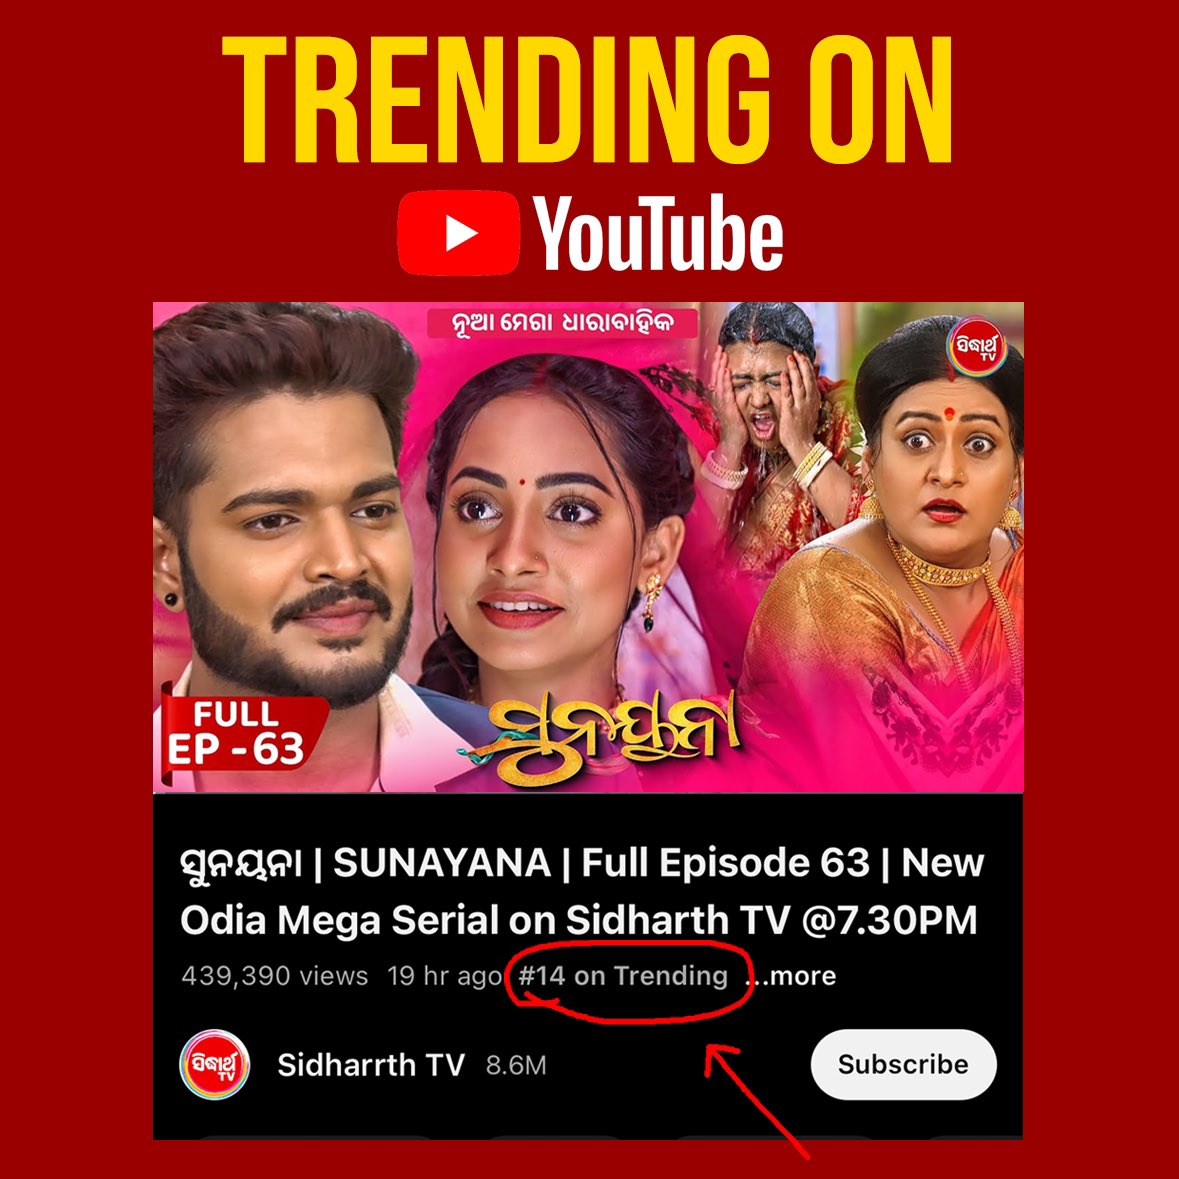 Your favourite mega serial, 'Sunayana,' is currently trending on YouTube!
Watch Sunayana, Mon-Sat @ 7:30 PM - Only on Sidharth TV
#Sunayana #MegaSerial #SidharthTV #NamitaAgrawal #SitaramAgrawal #SidharrthTV